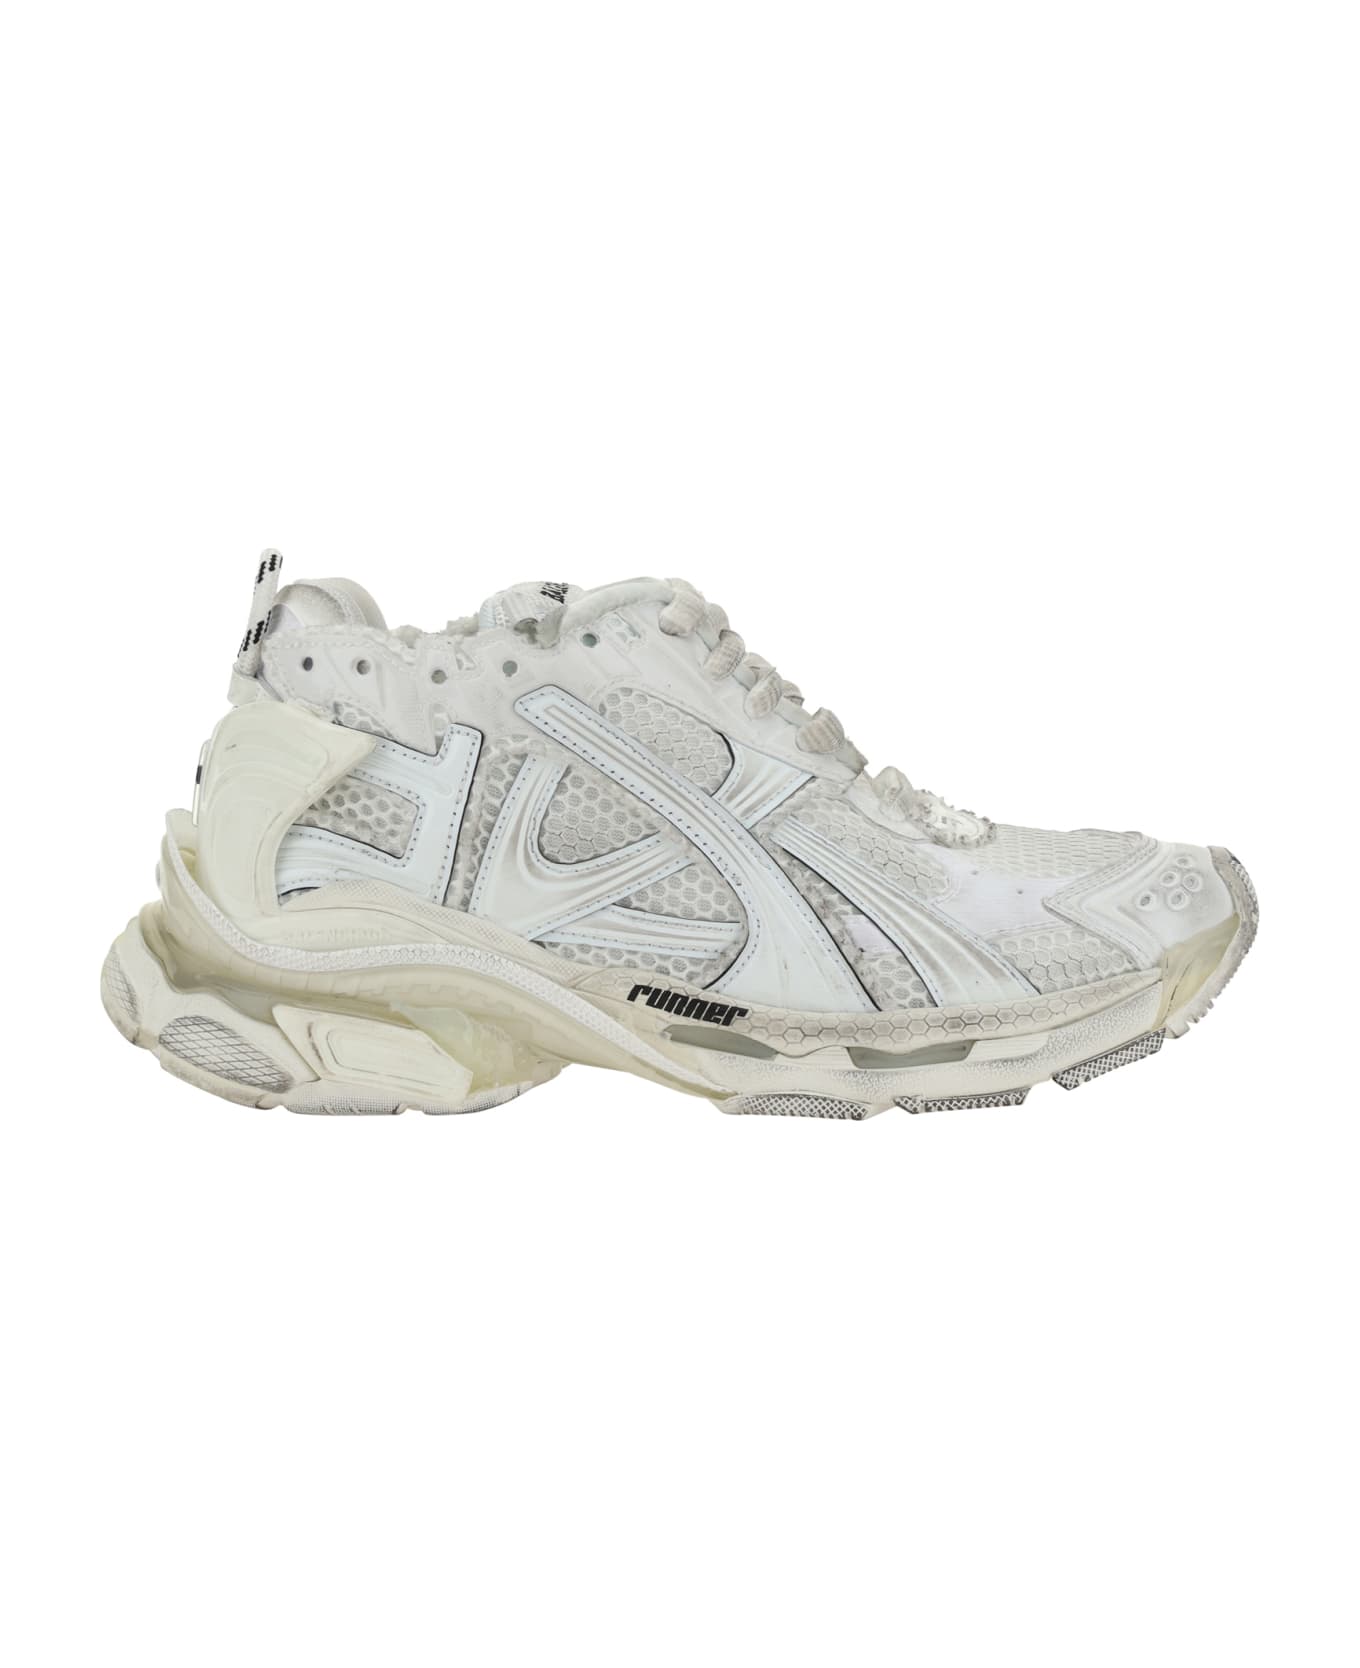 Balenciaga Runner Mesh Sneakers - White スニーカー